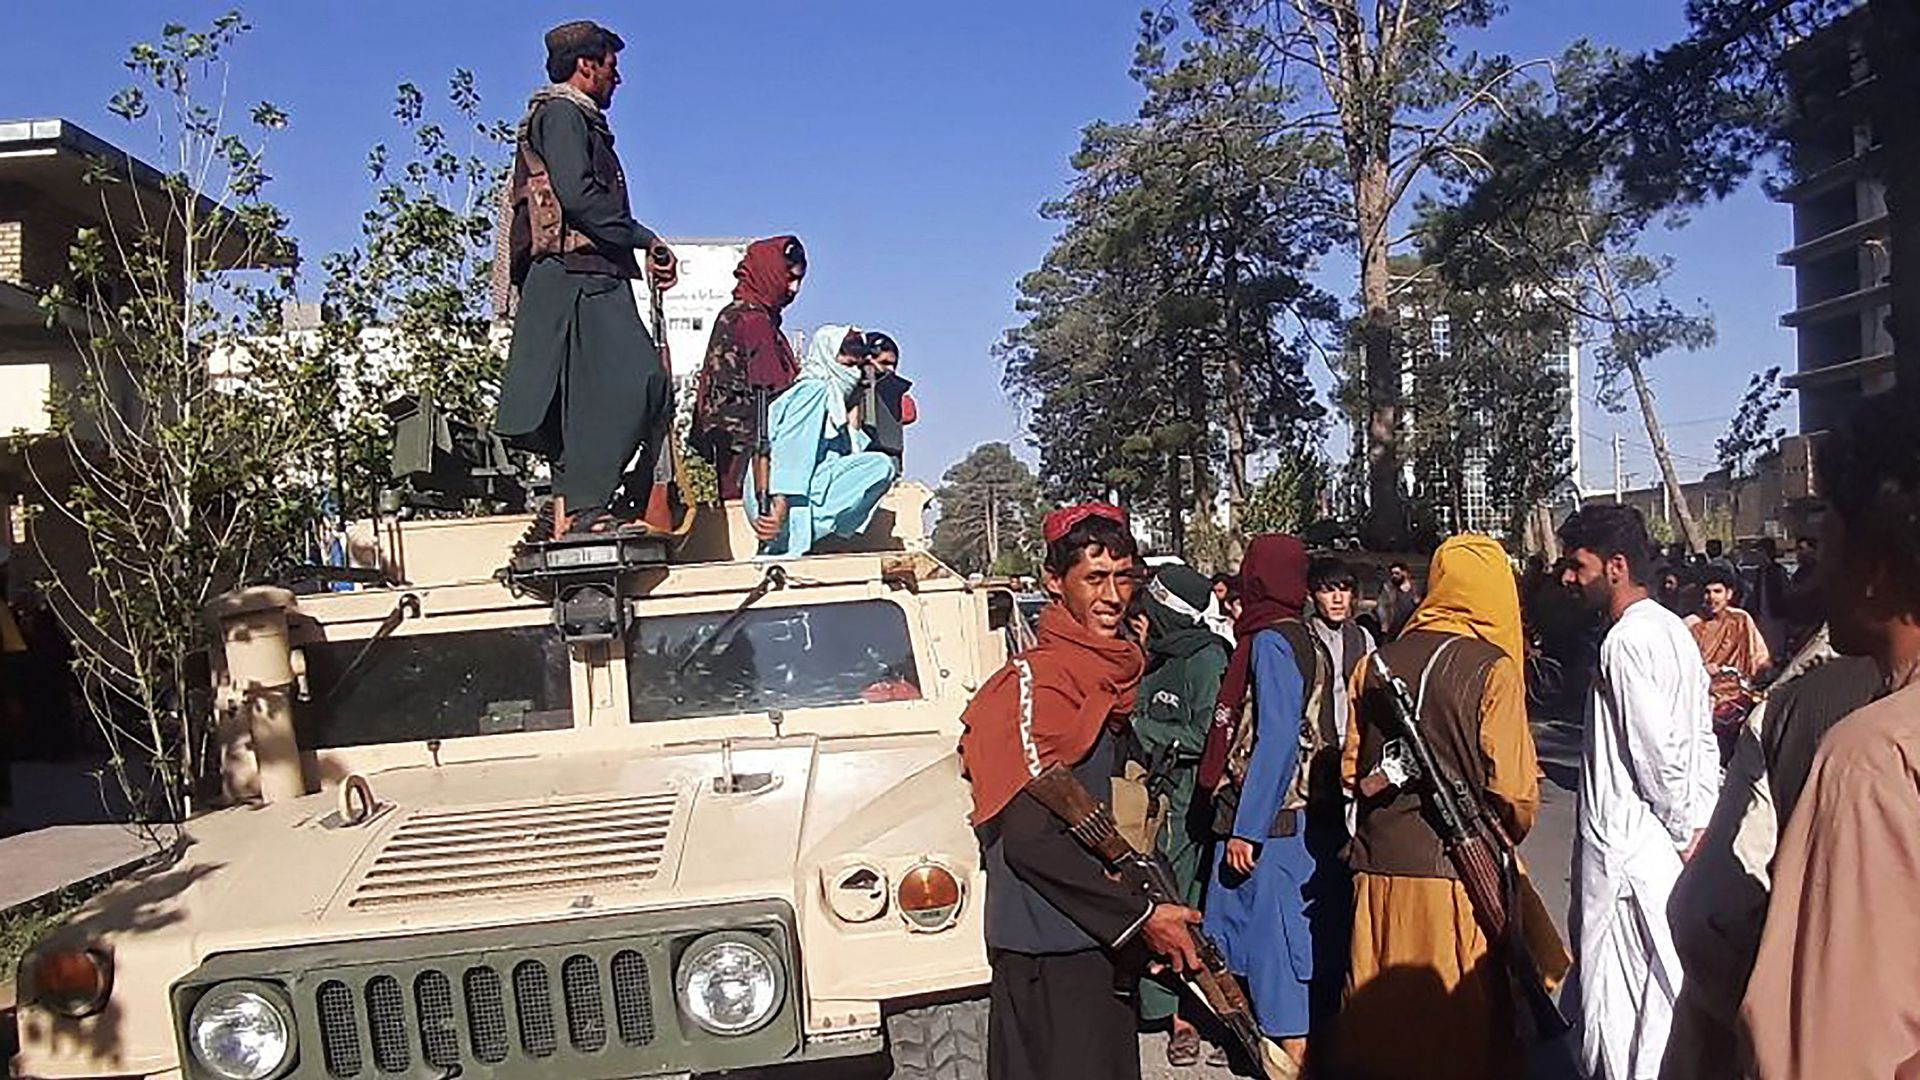 Taliban fighters in Herat